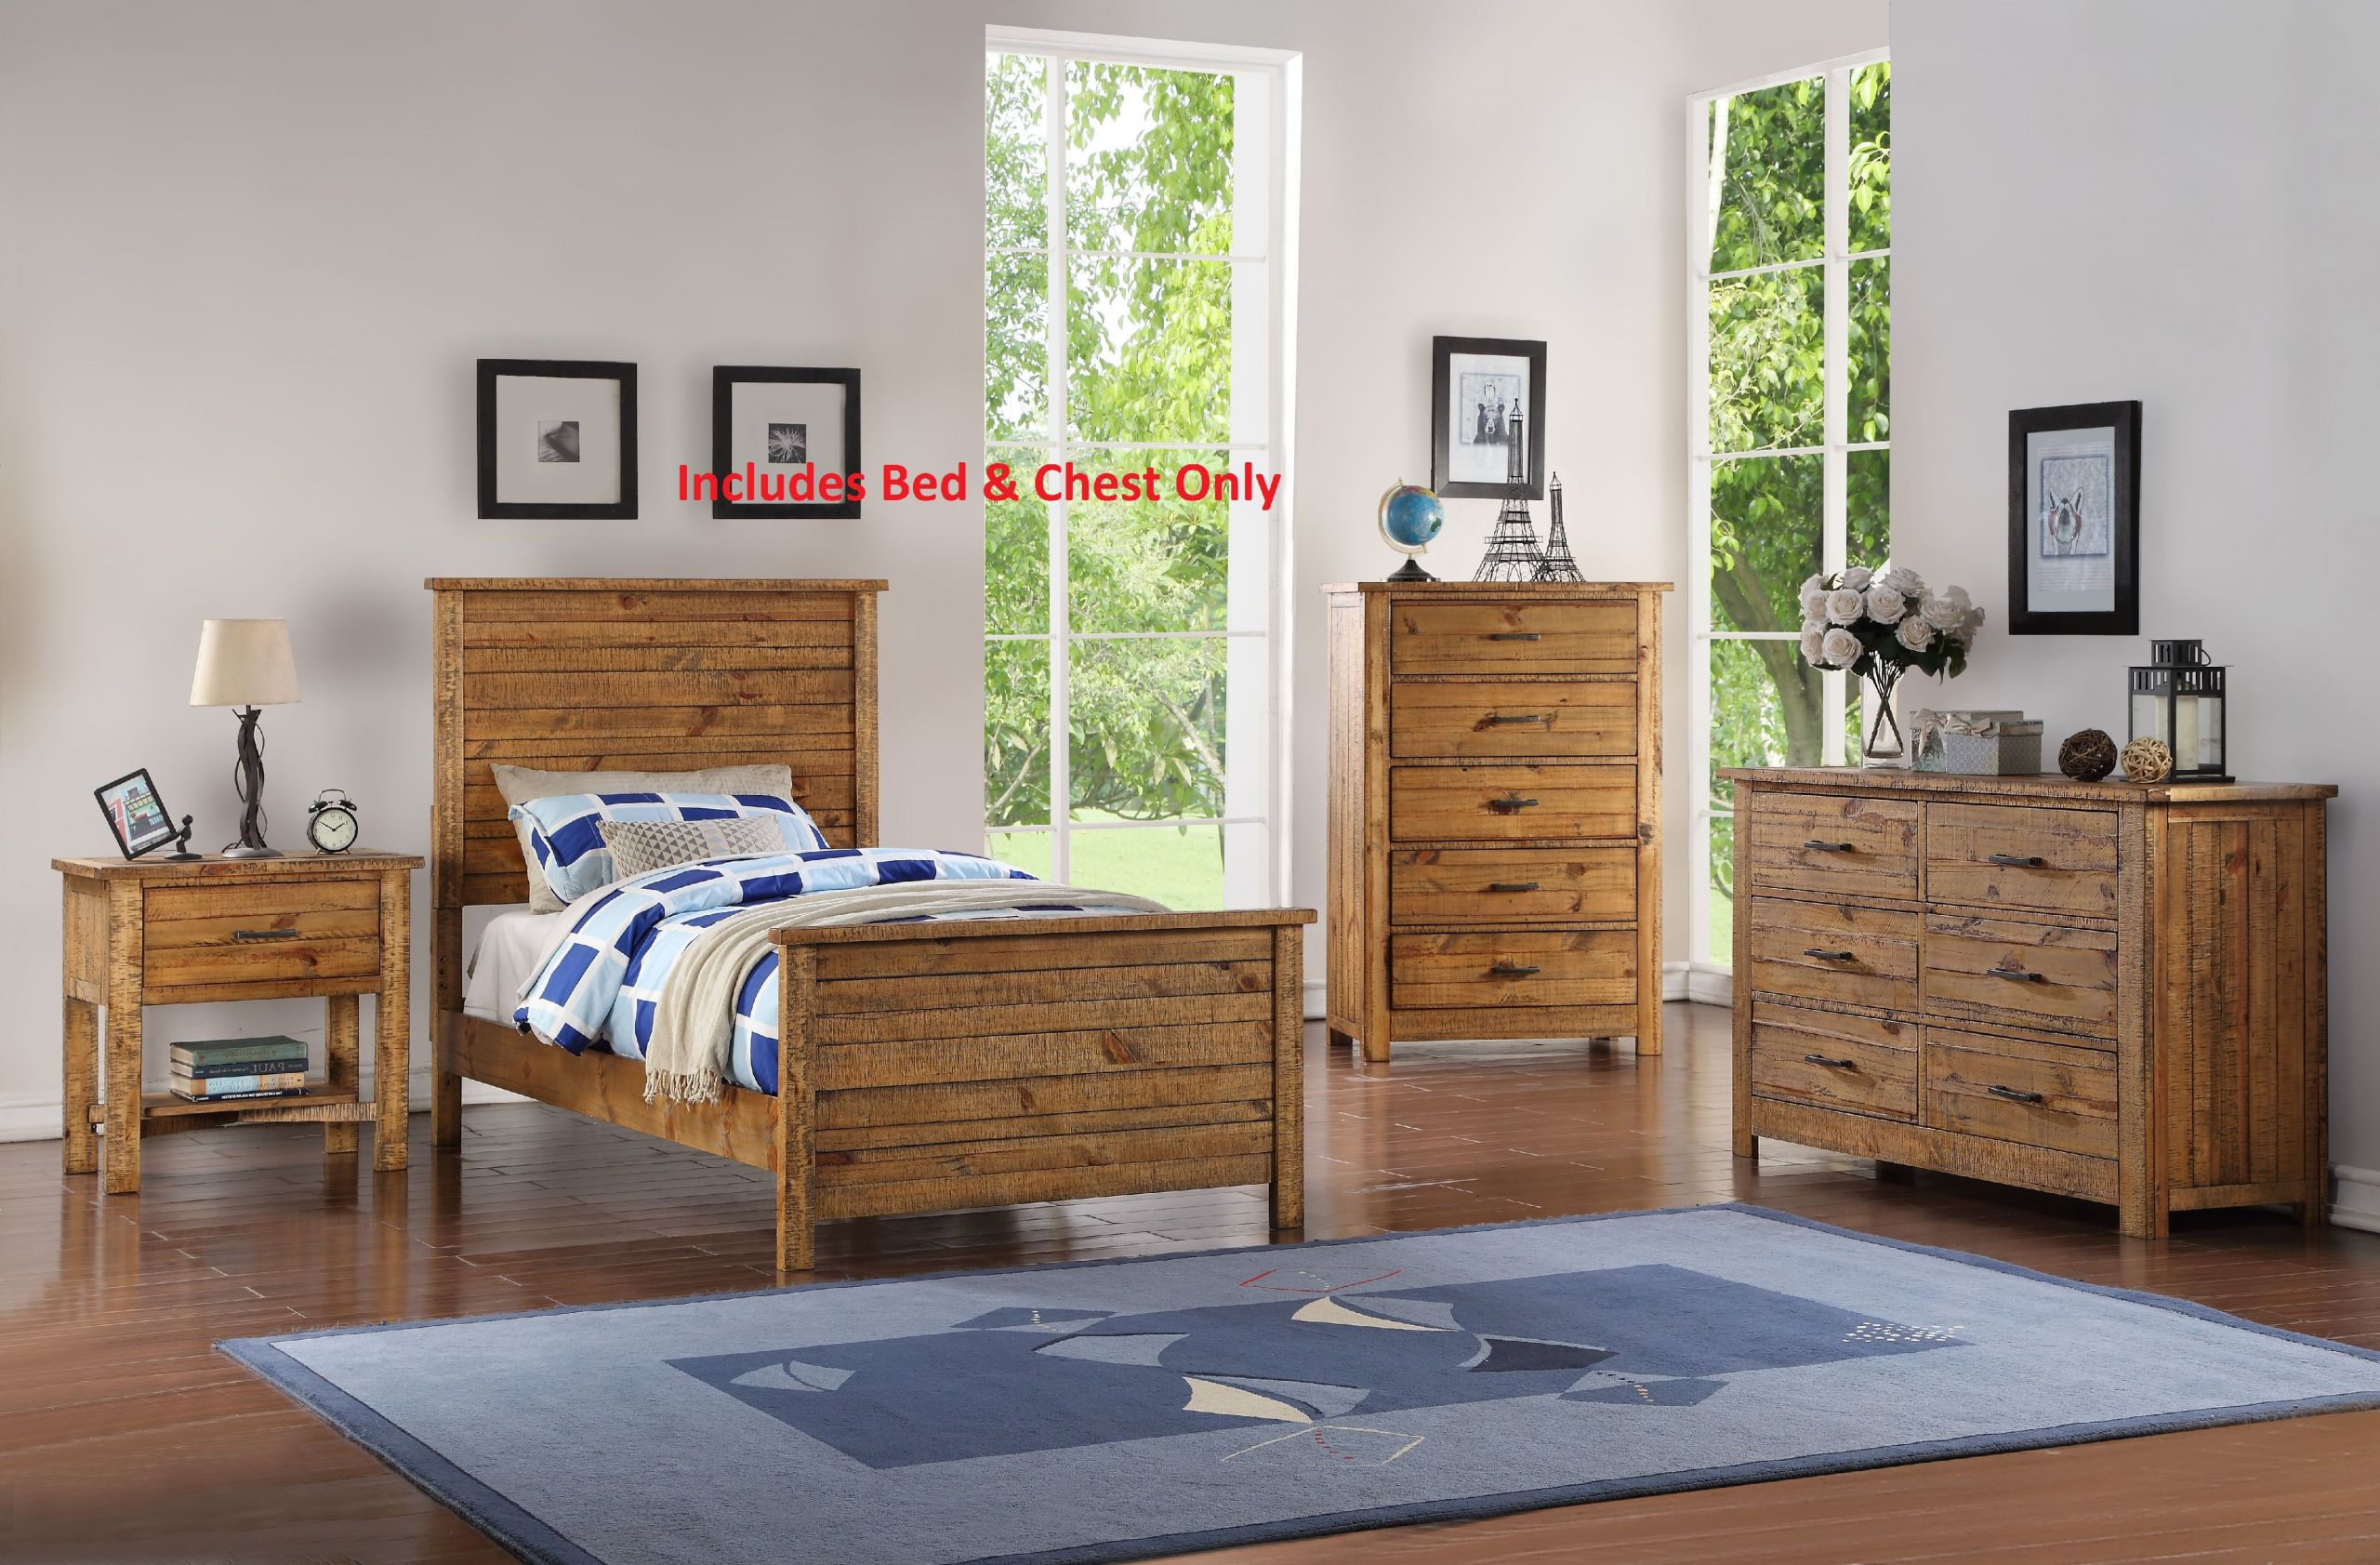 Walmart Kids Bedroom Sets
 Madison 2 Piece Twin Size Natural Wood Rustic Kids Bedroom